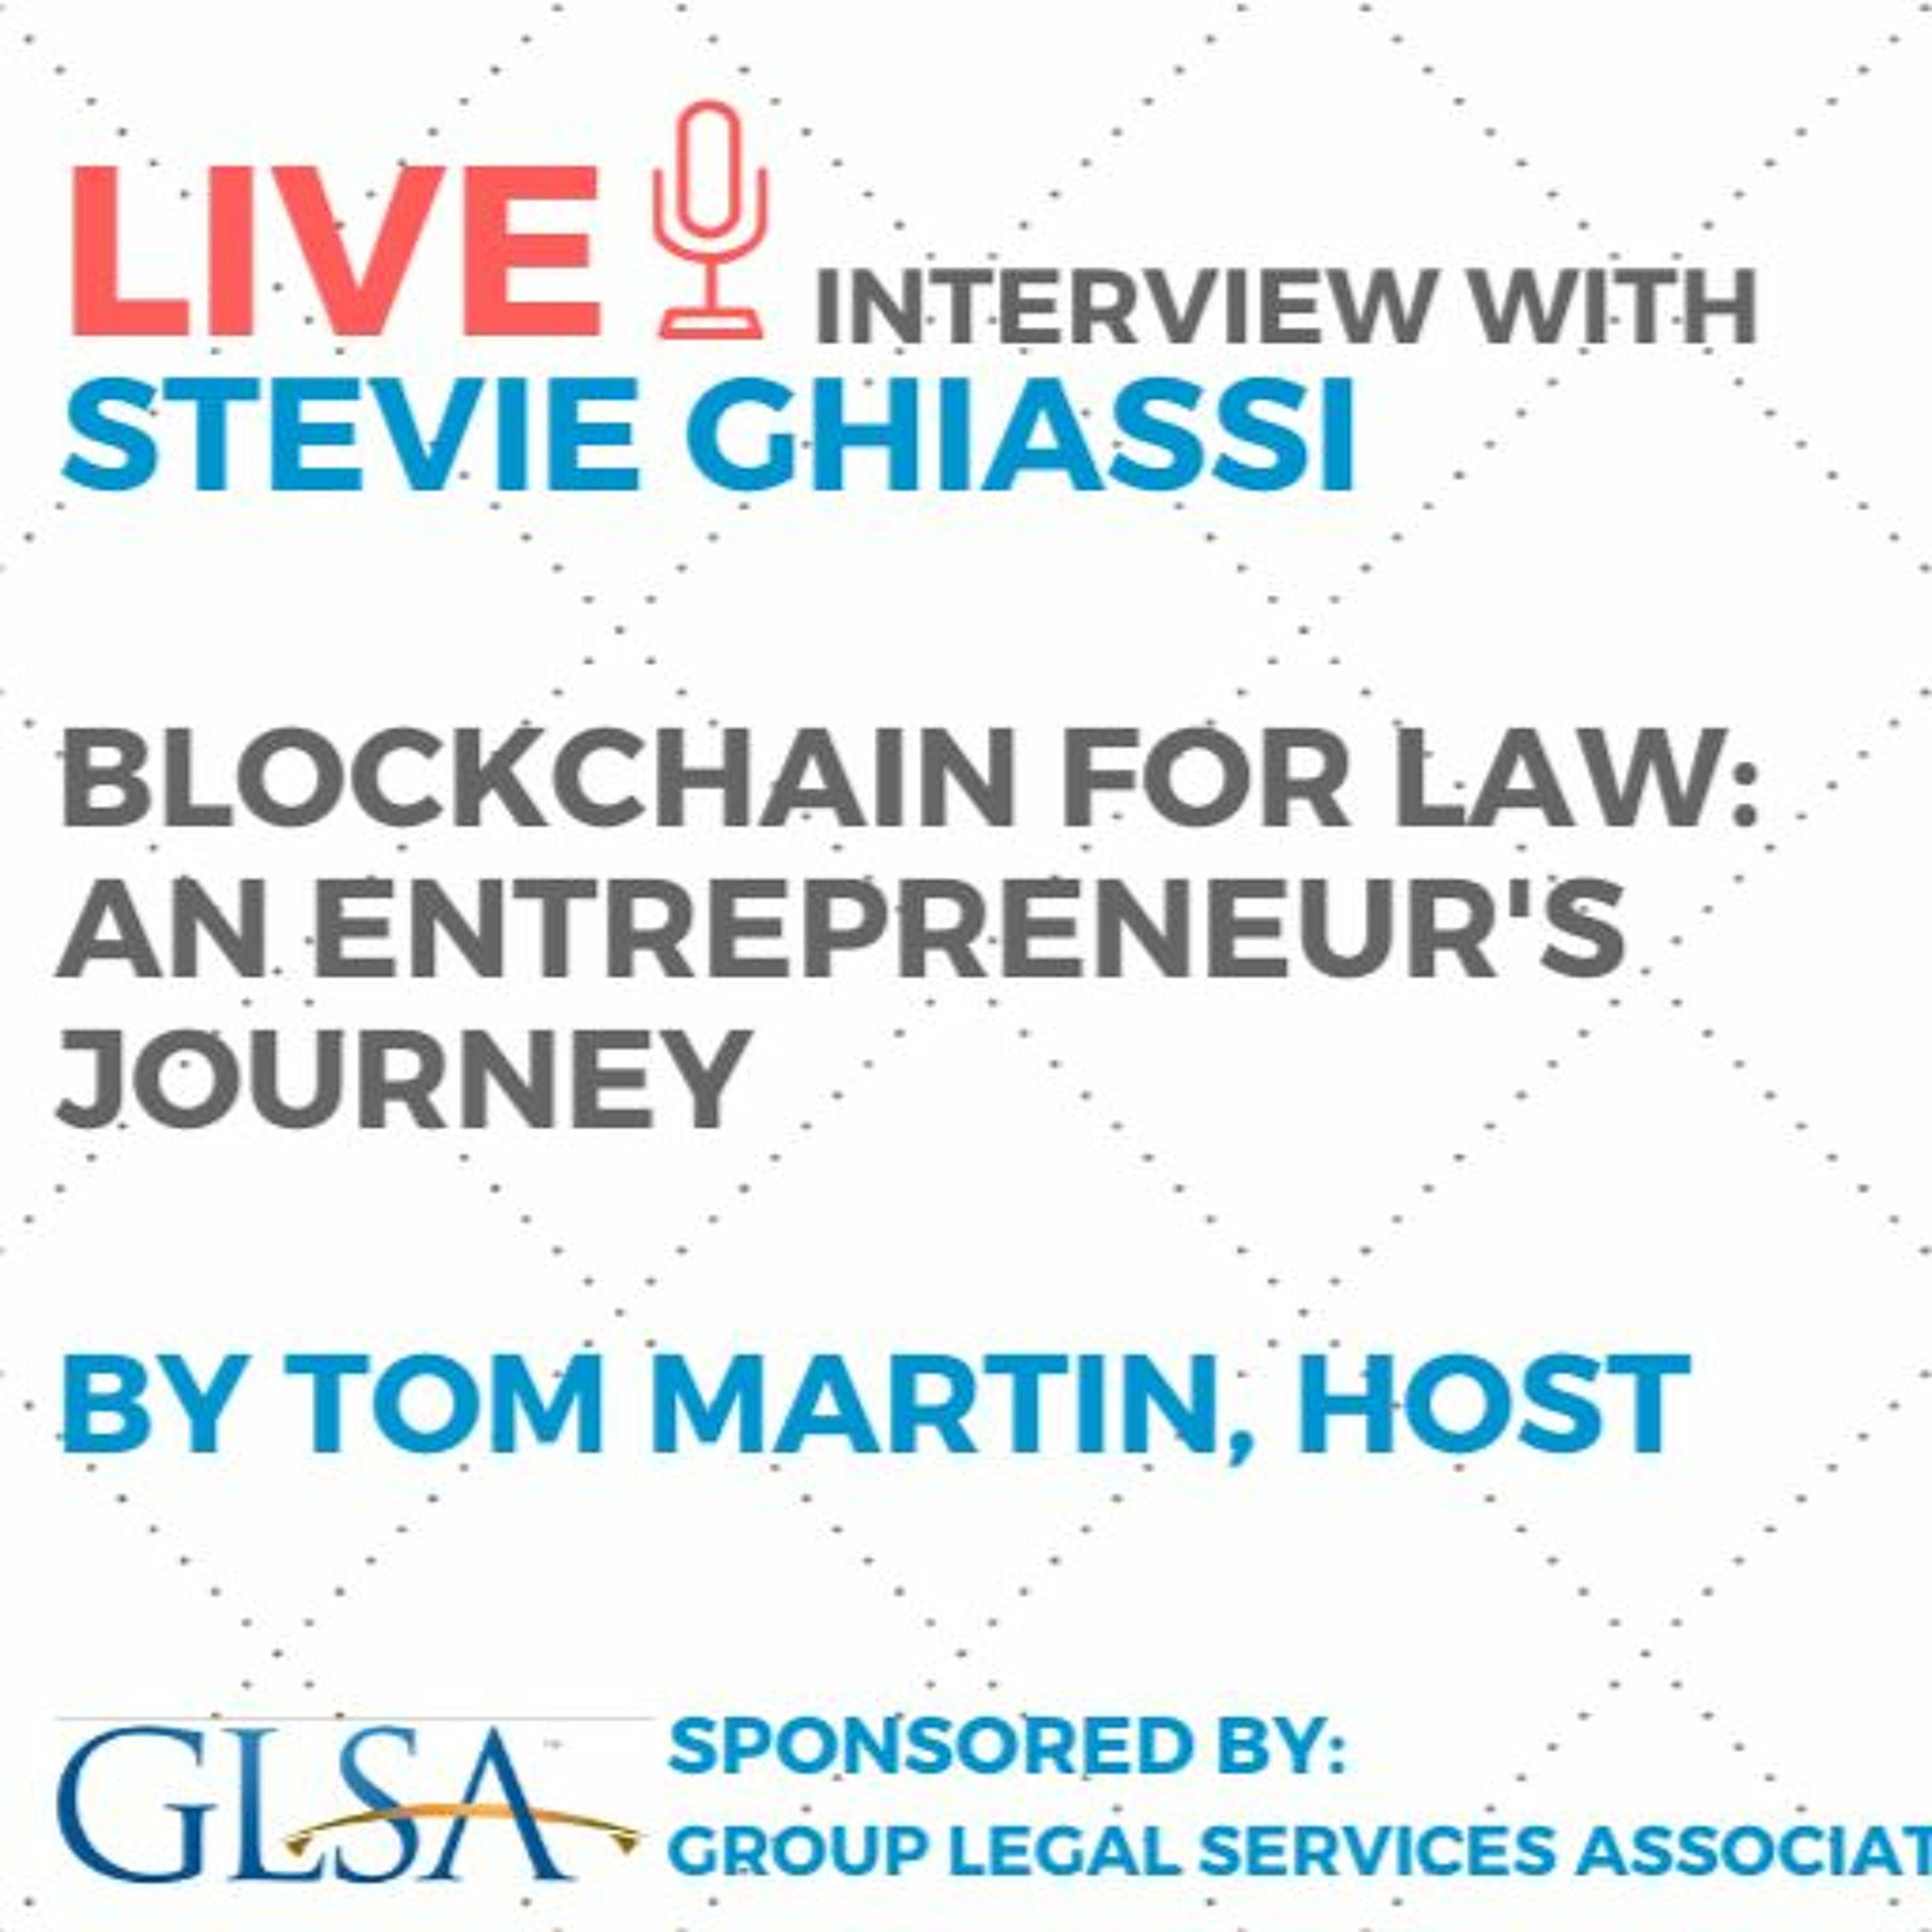 Blockchain for Law: an Entrepreneur’s Journey with Stevie Ghiassi